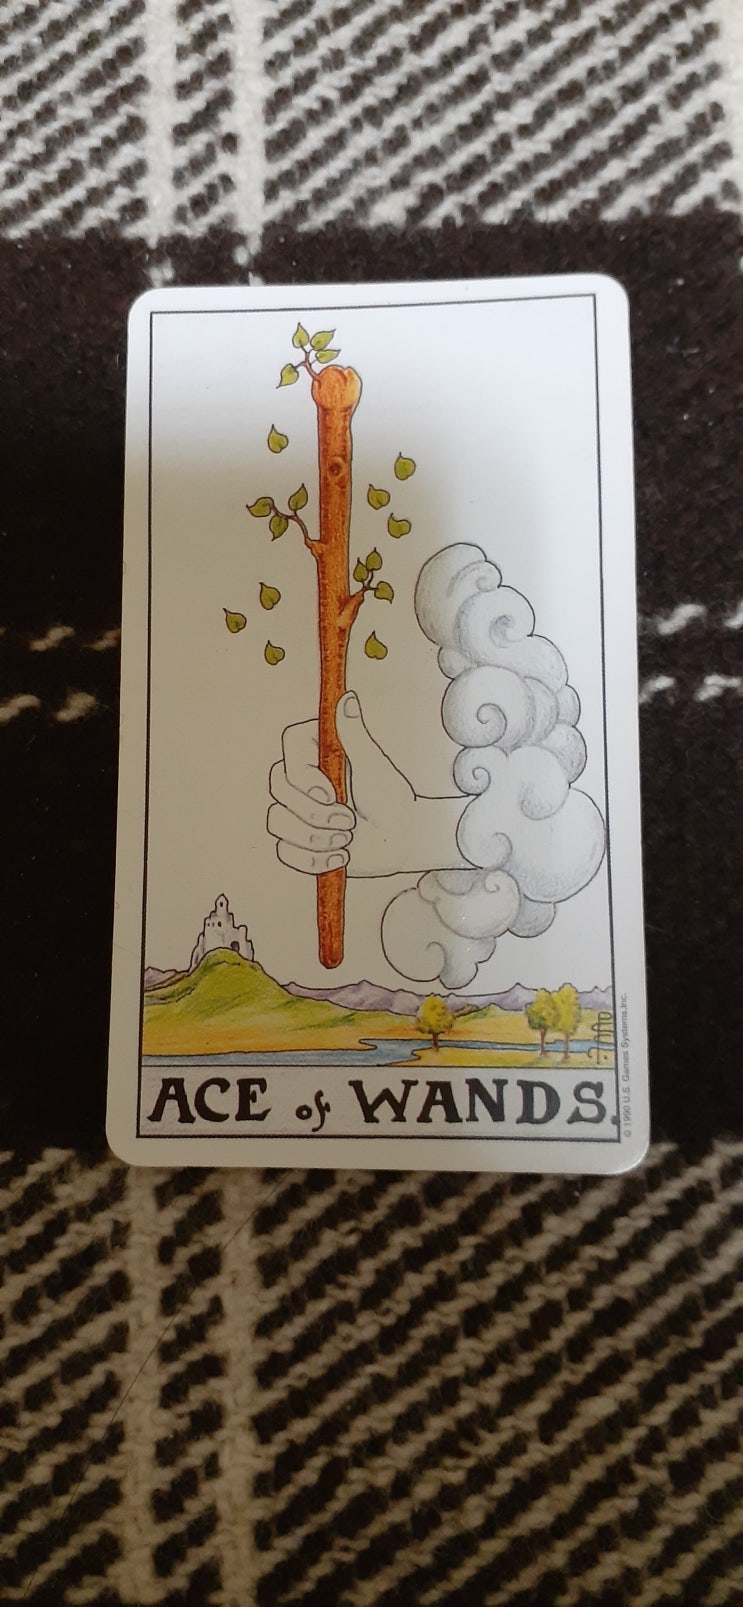 Ace of Wands타로카드